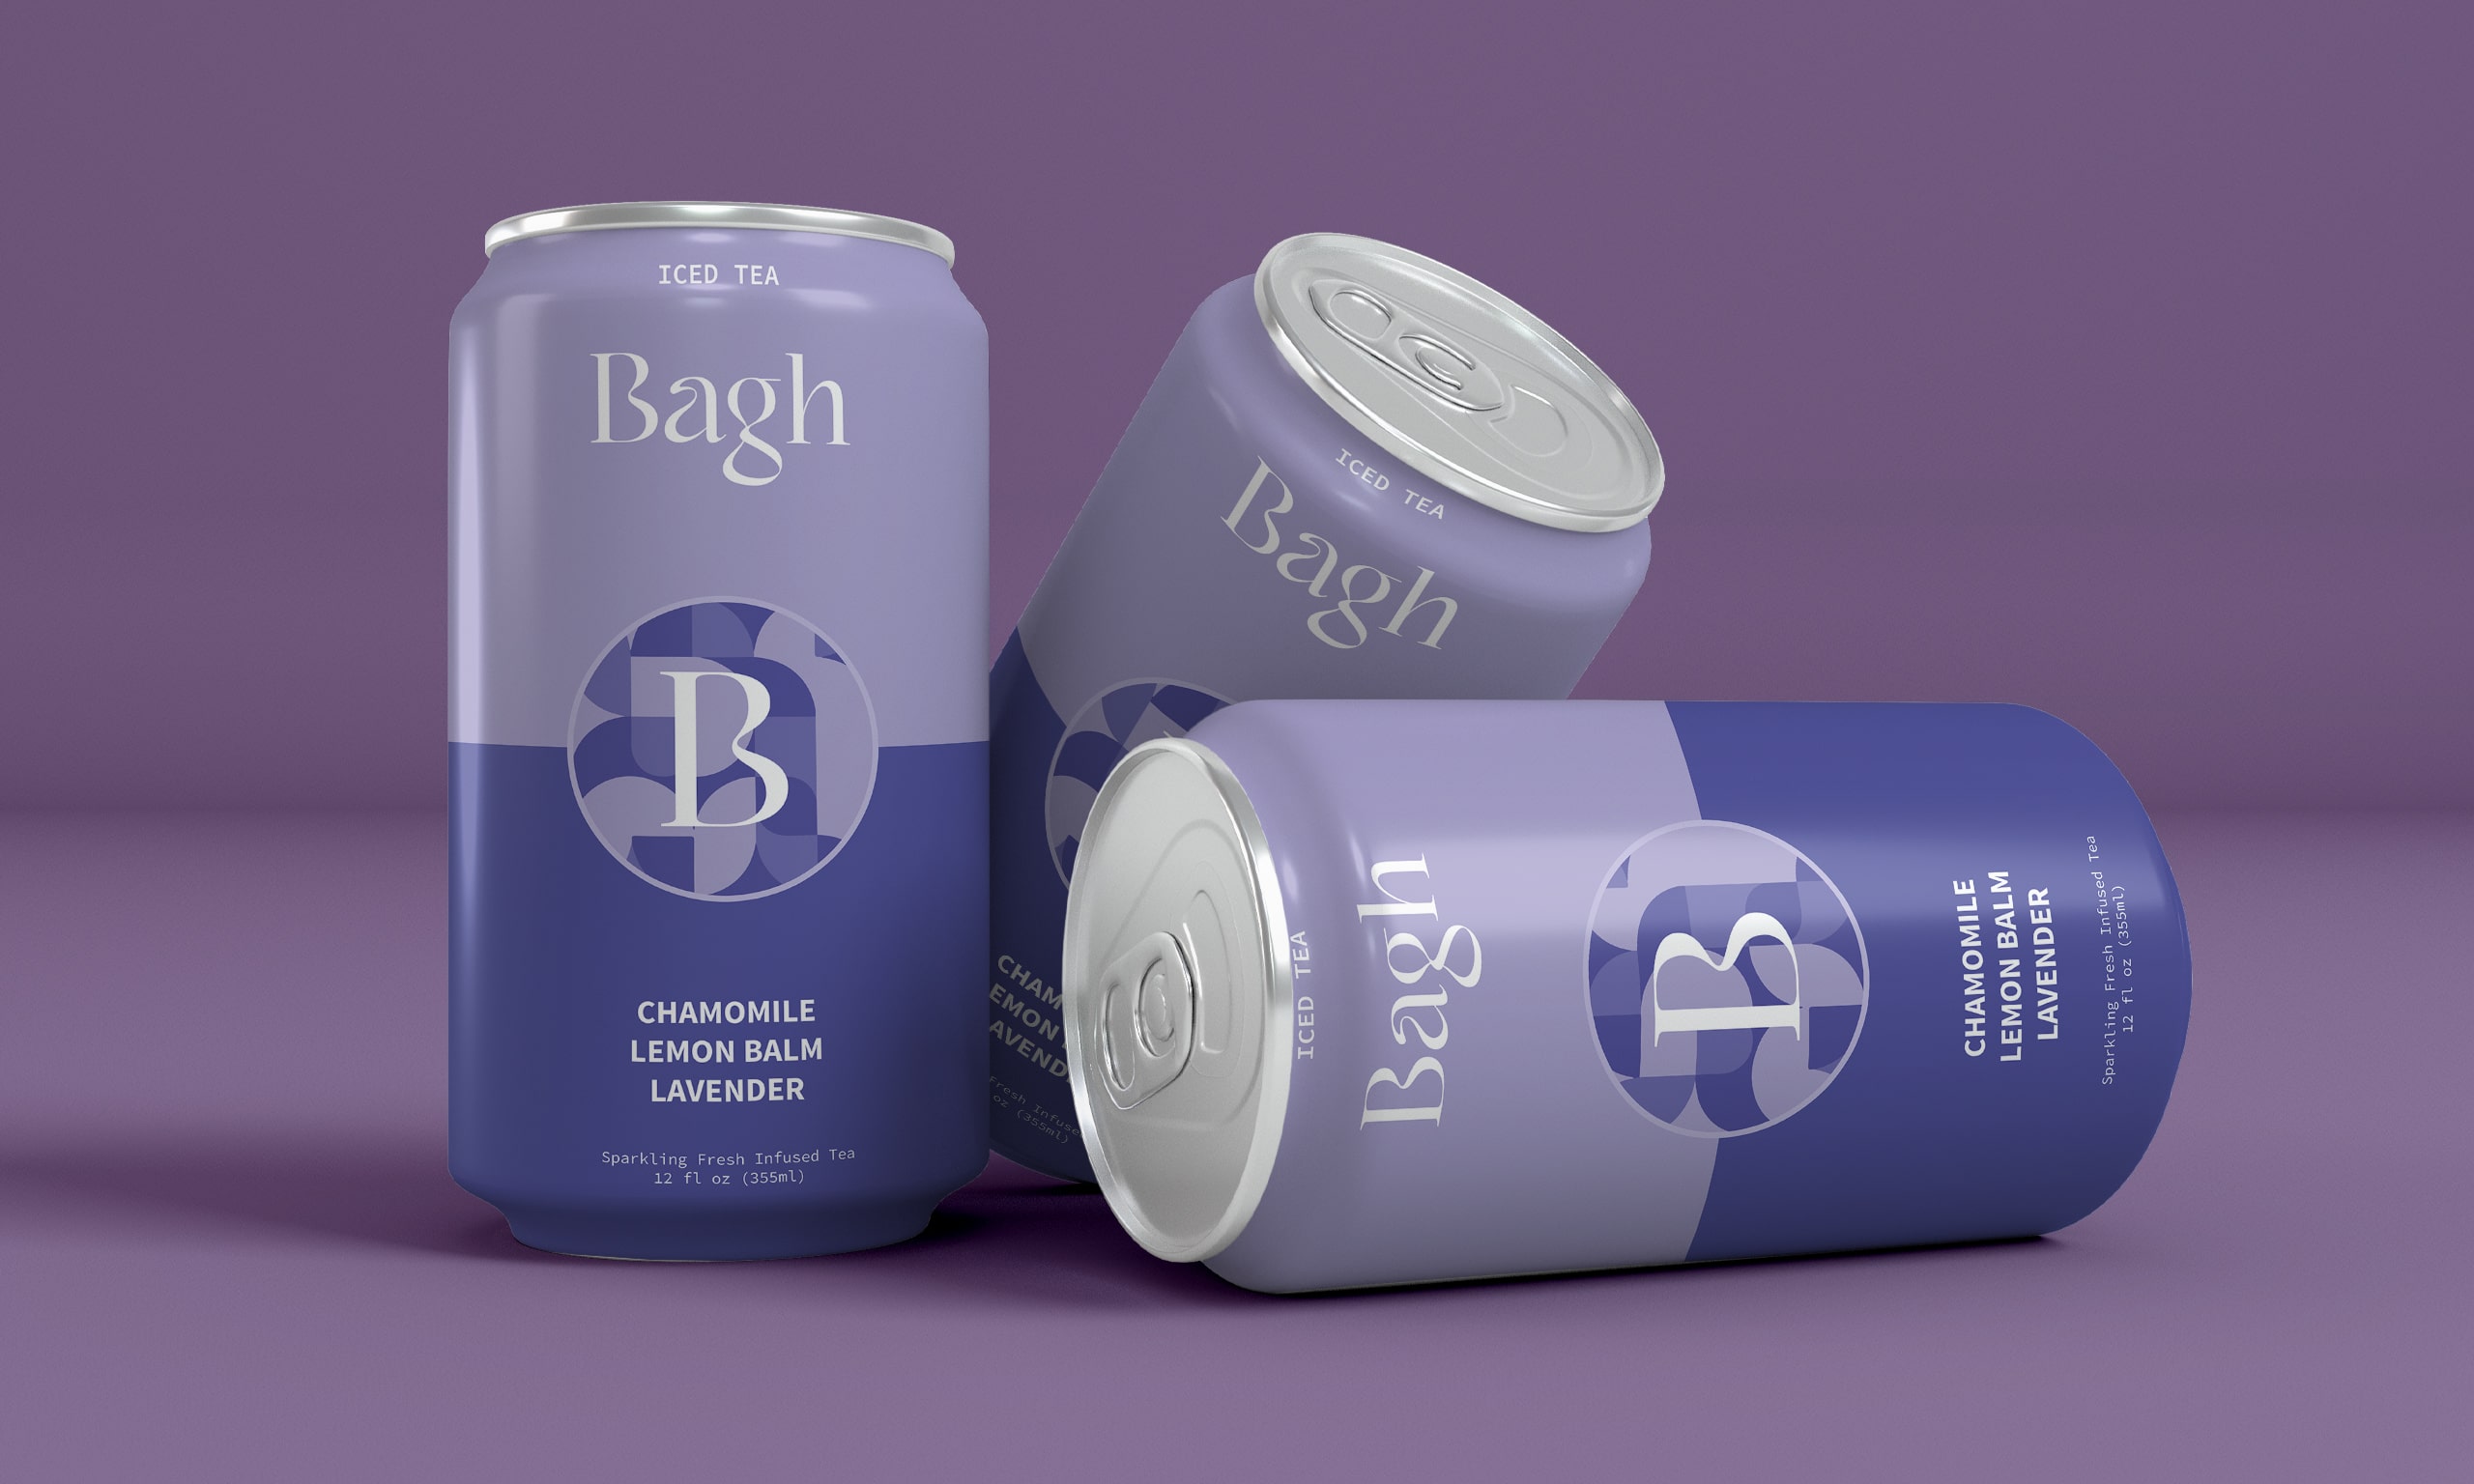 Bagh_Iced_lavender_packaging_culr-min.jpg